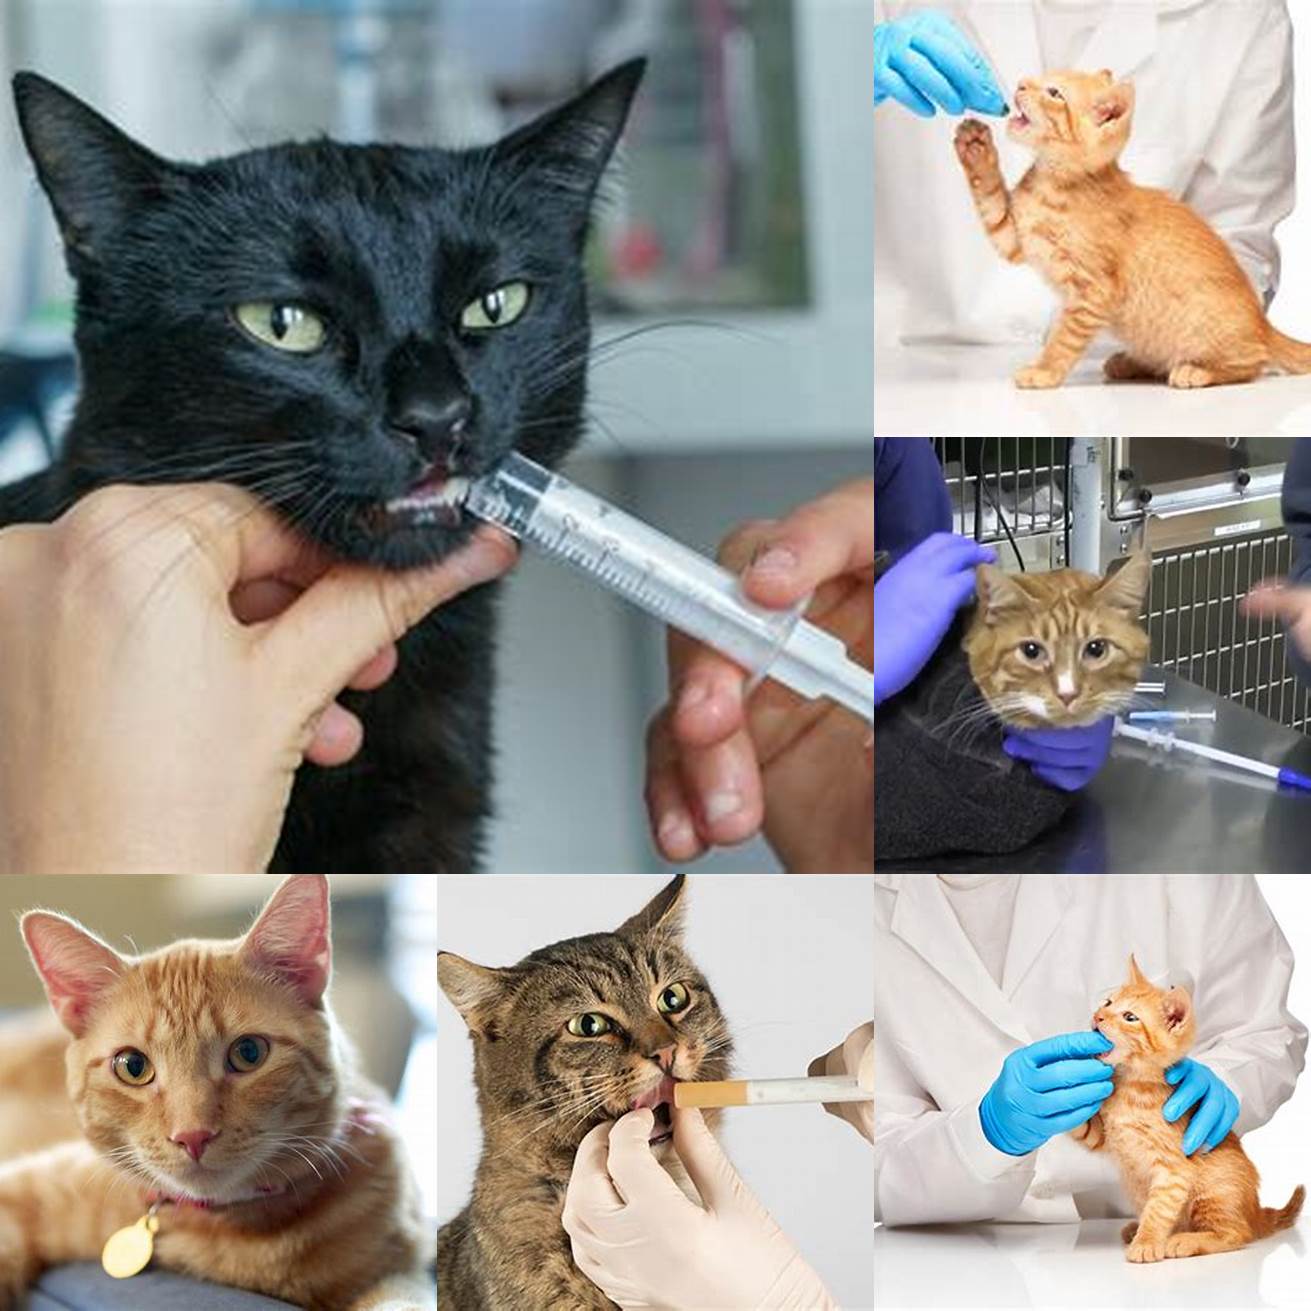 Expertise in feline medicine